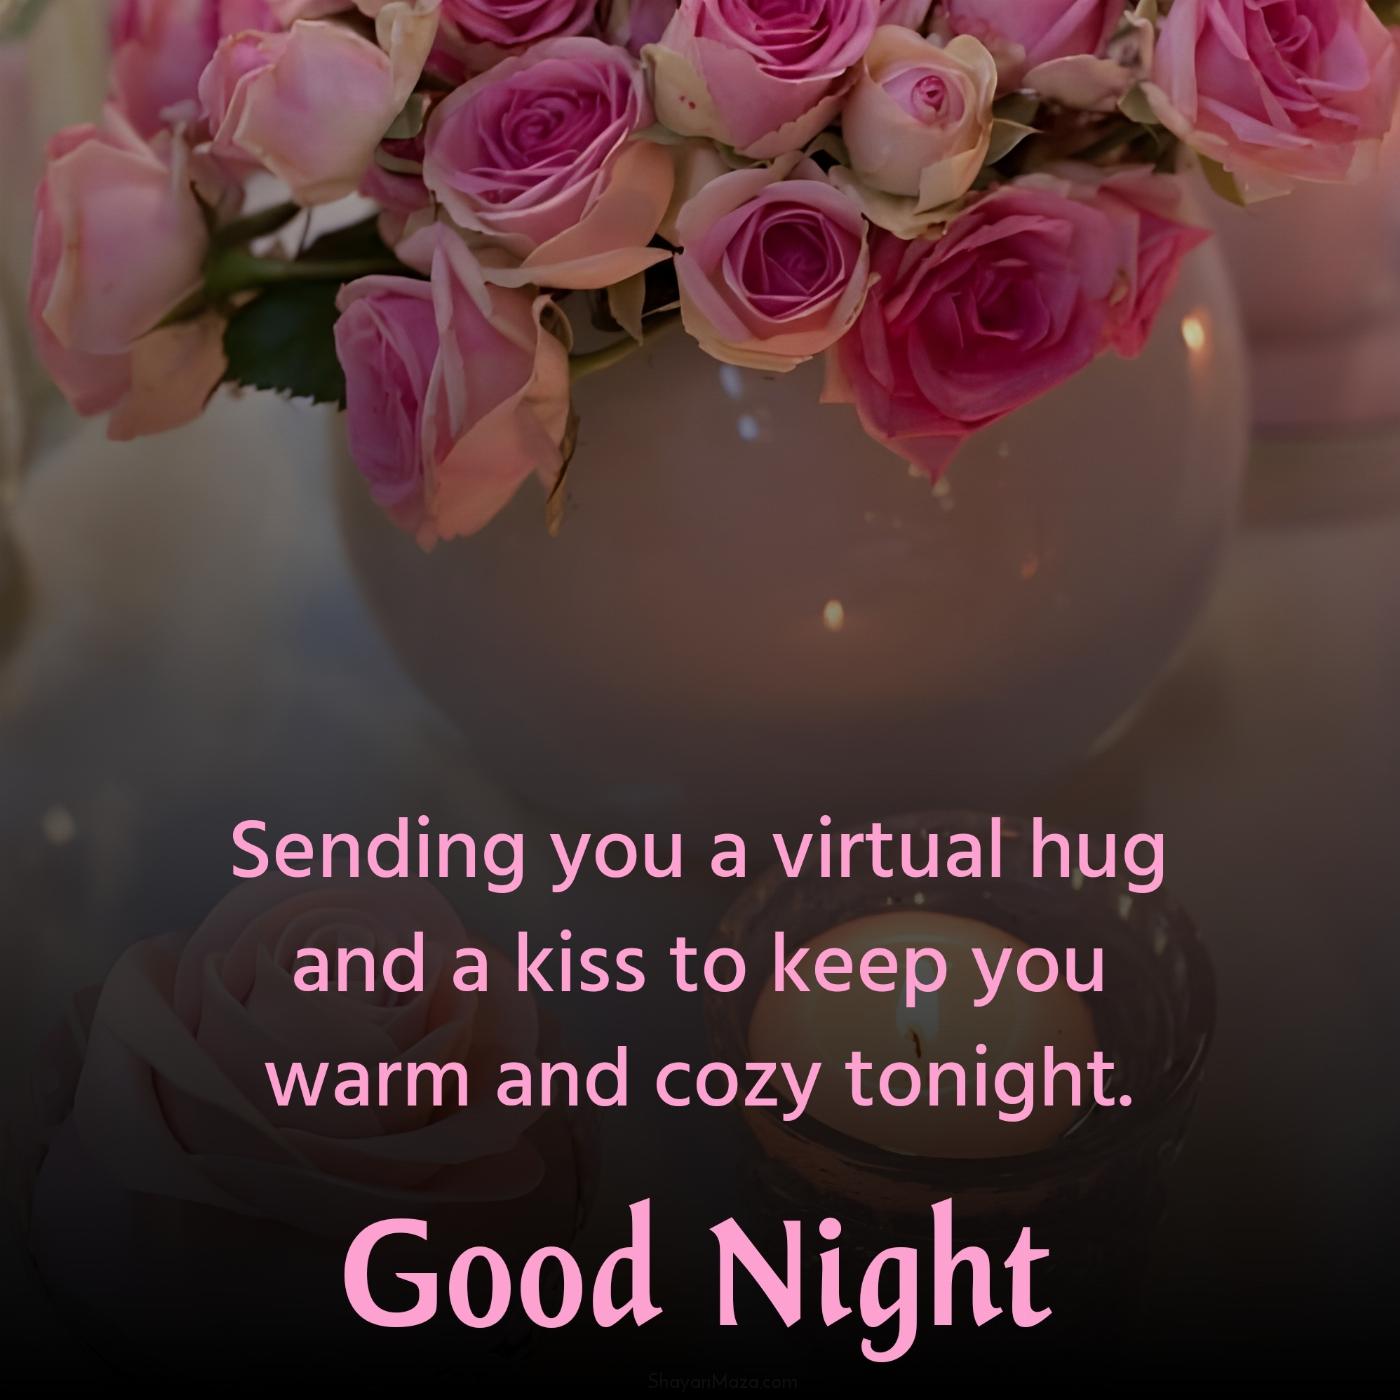 Sending you a virtual hug and a kiss to keep you warm